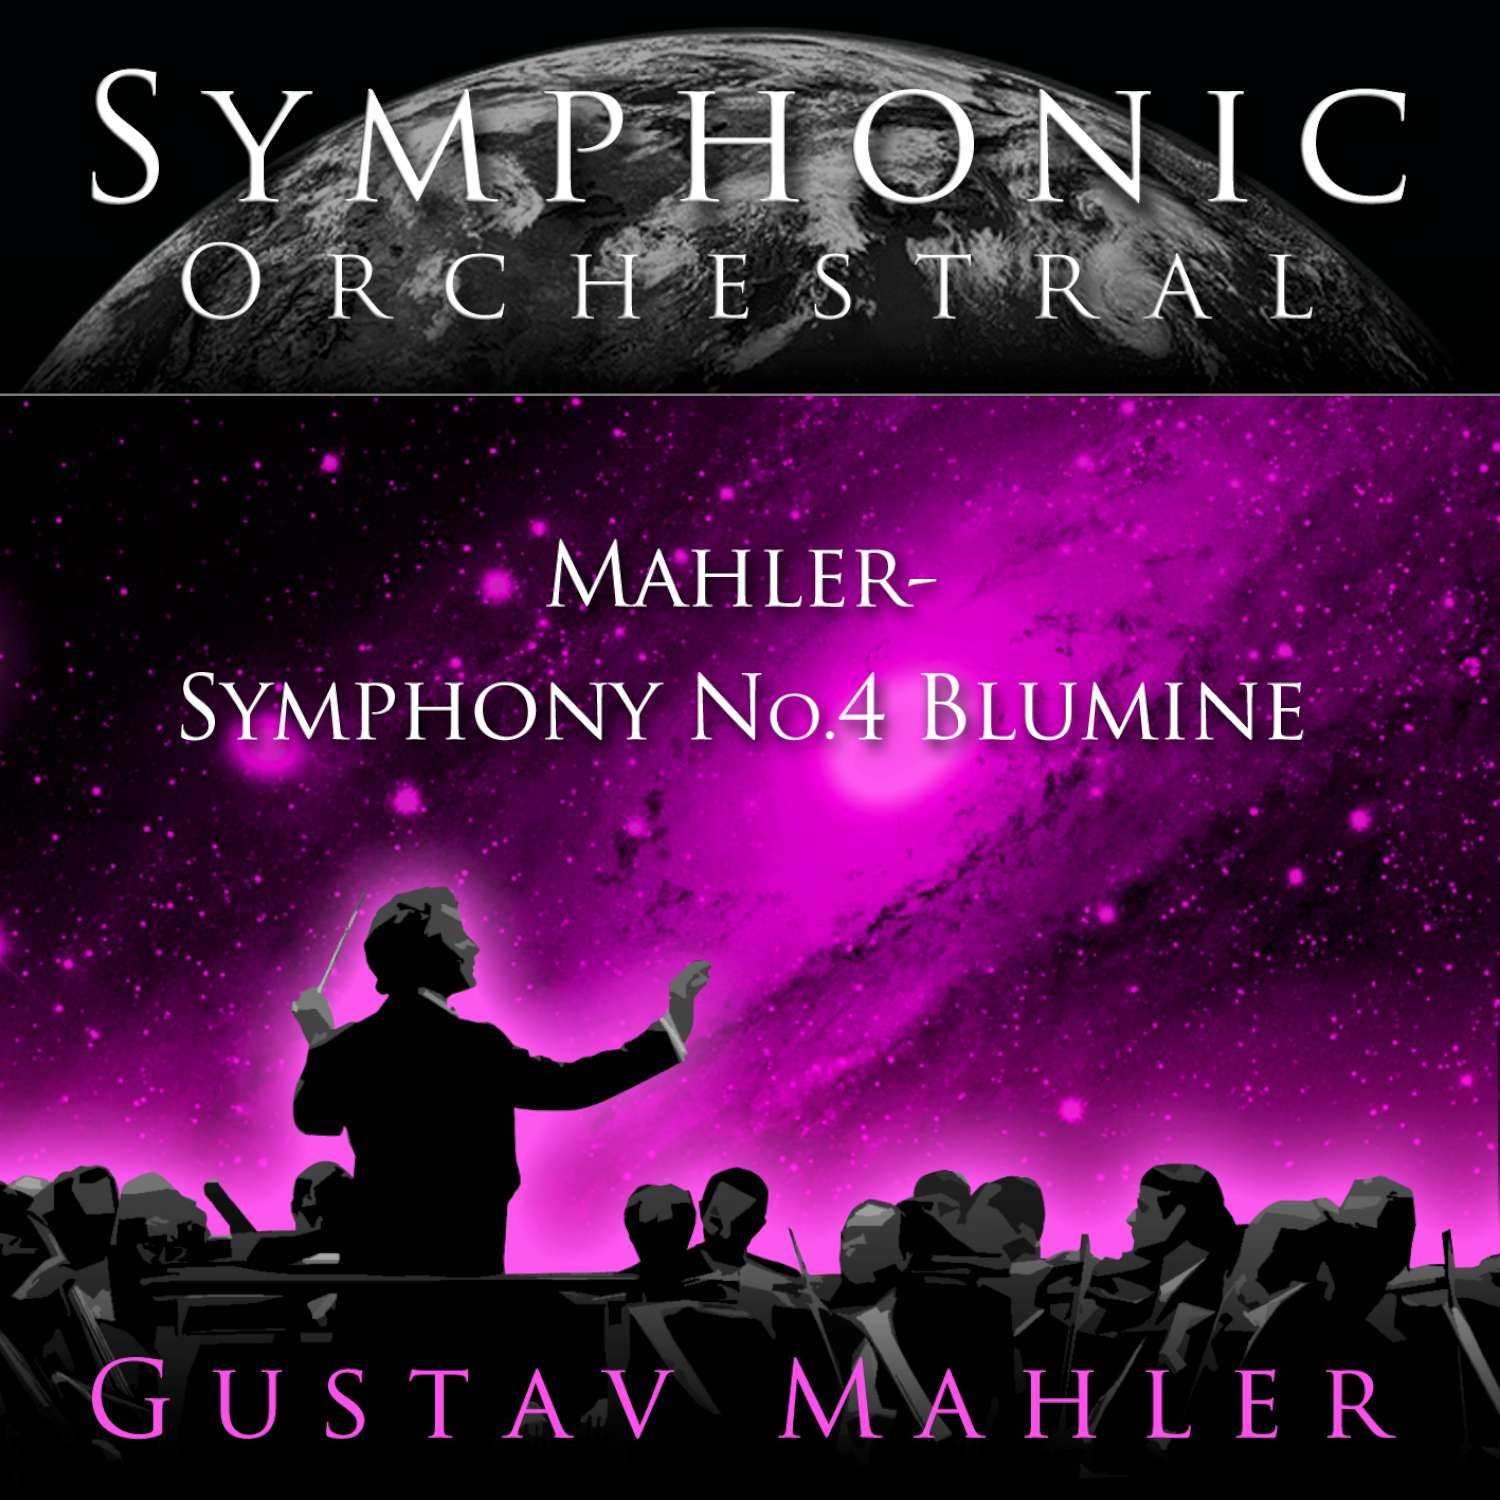 Symphonic Orchestral - Gustav Mahler: Symphony #4 Blumine